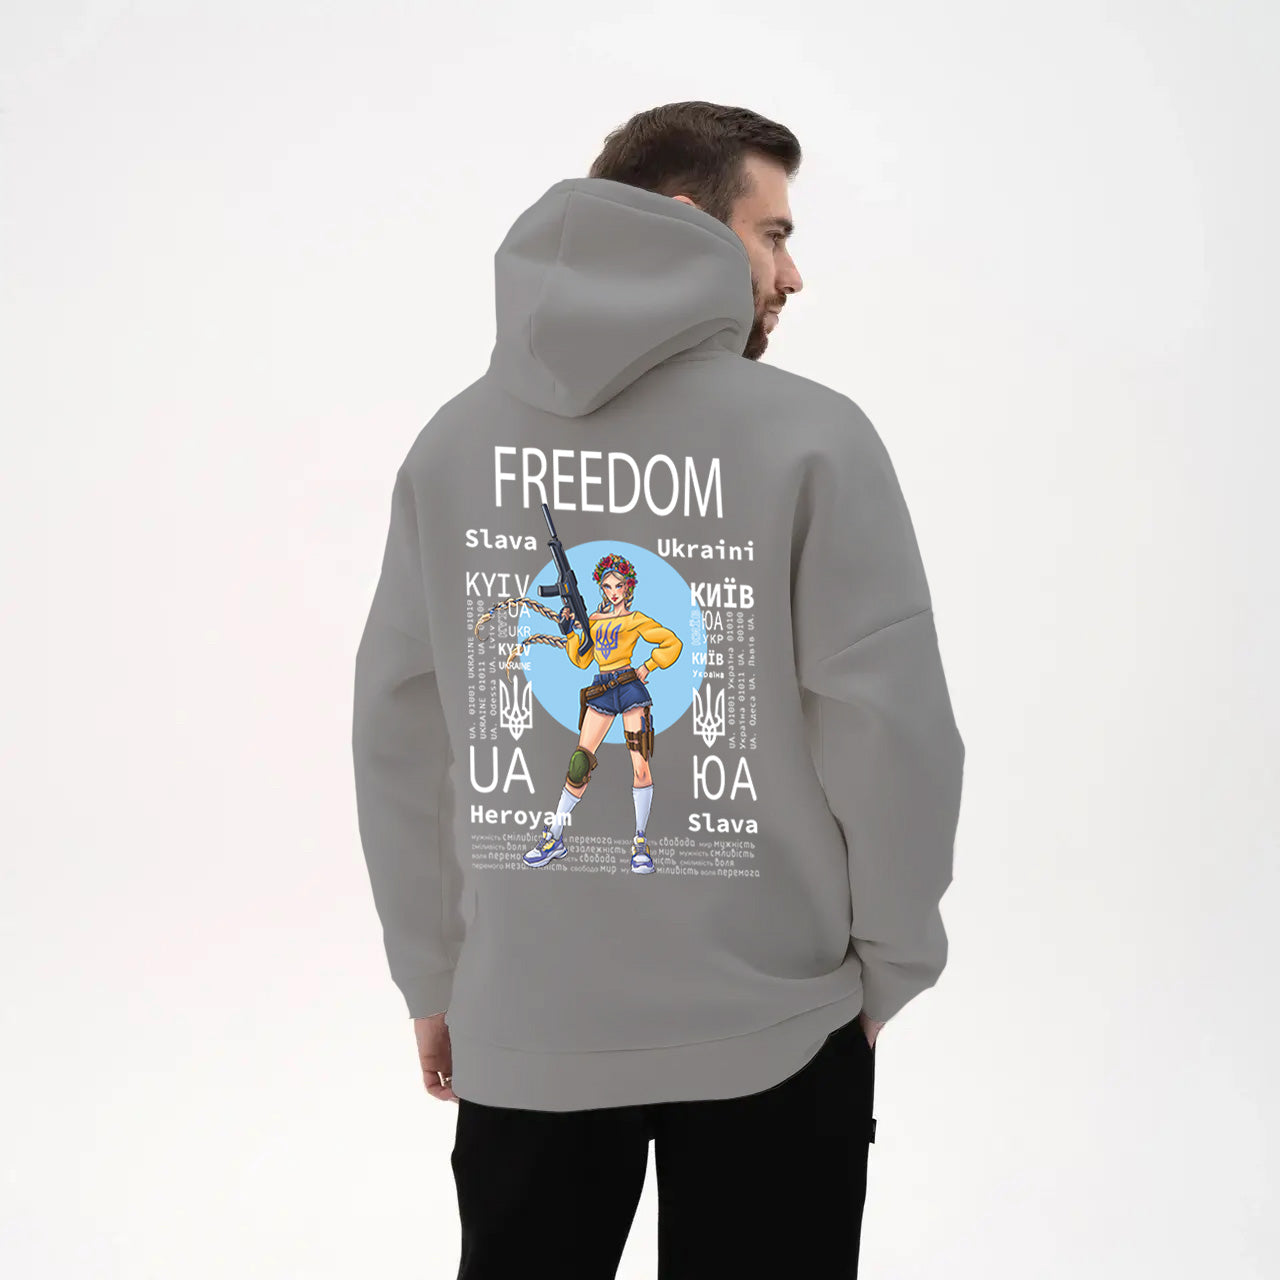 HOOODI - FREEDOM - СВОБОДА